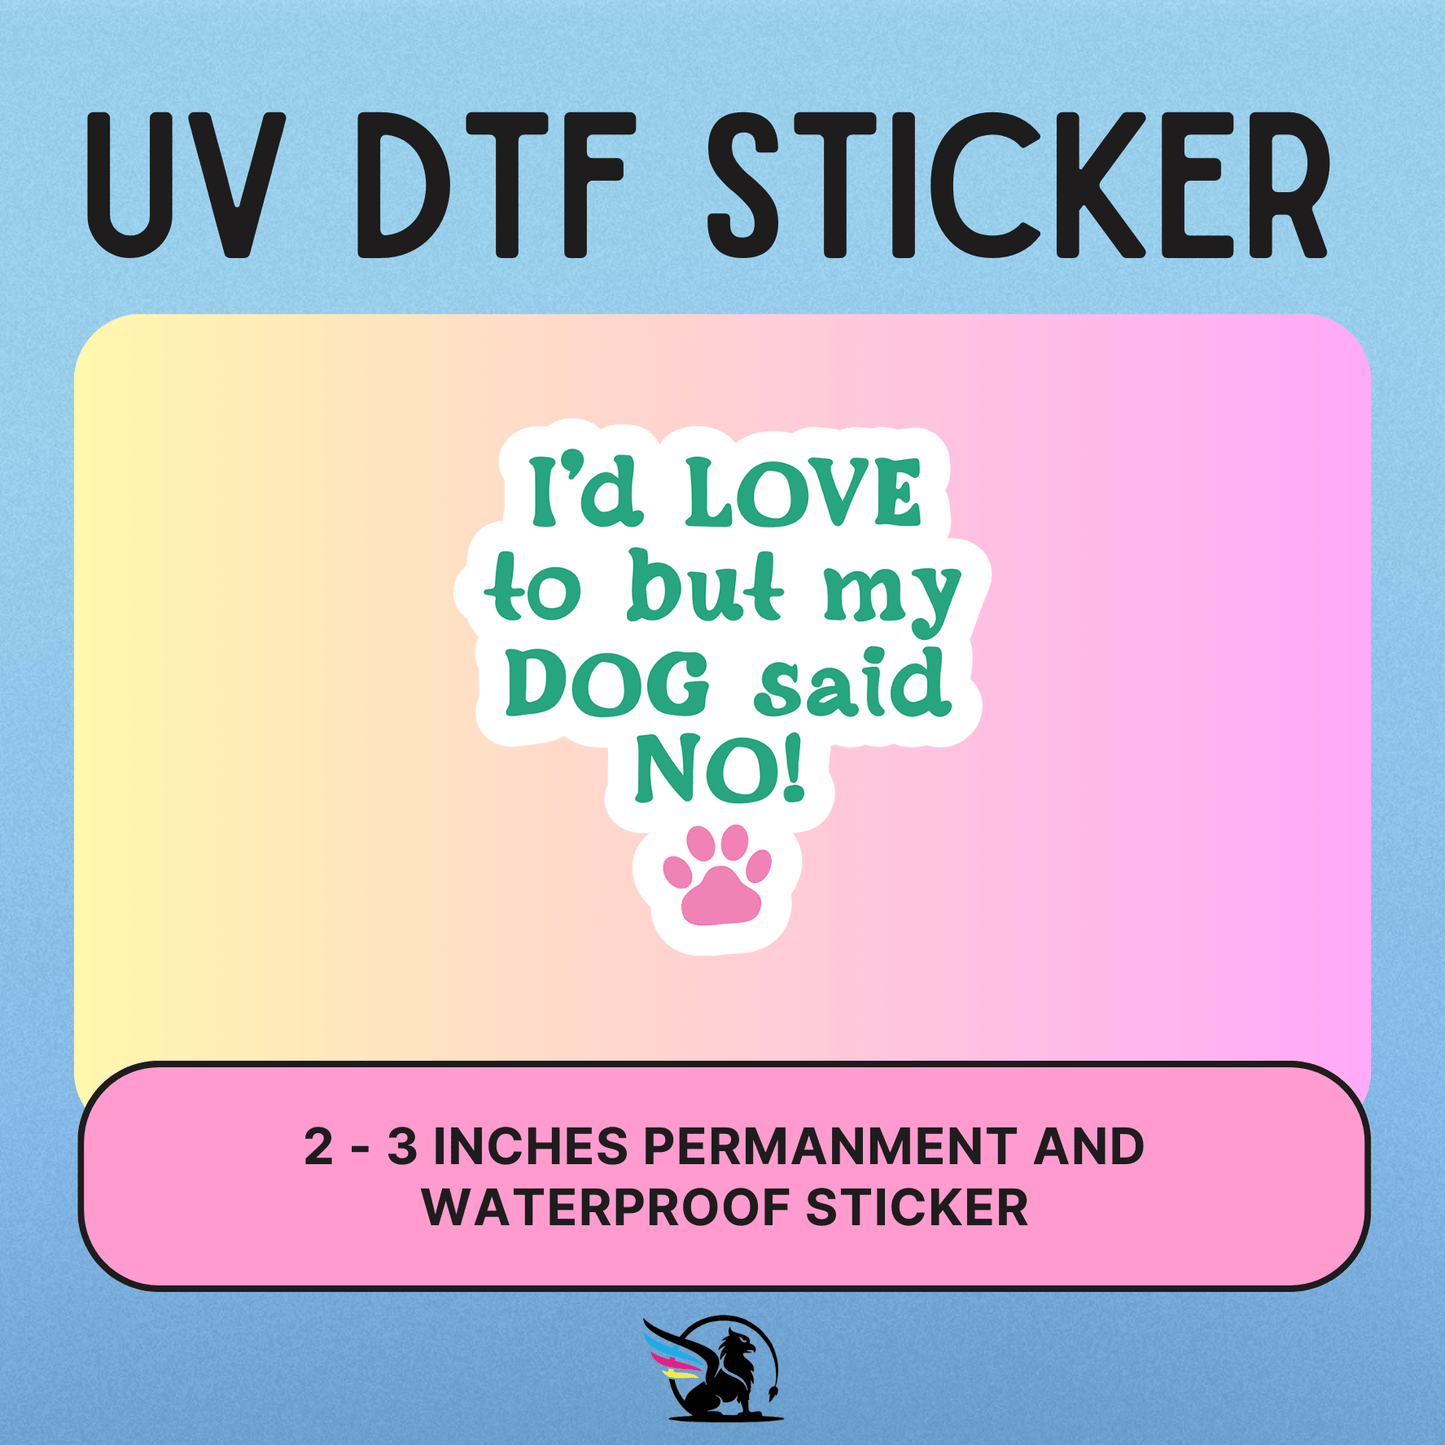 I'd Love To | UV DTF STICKER